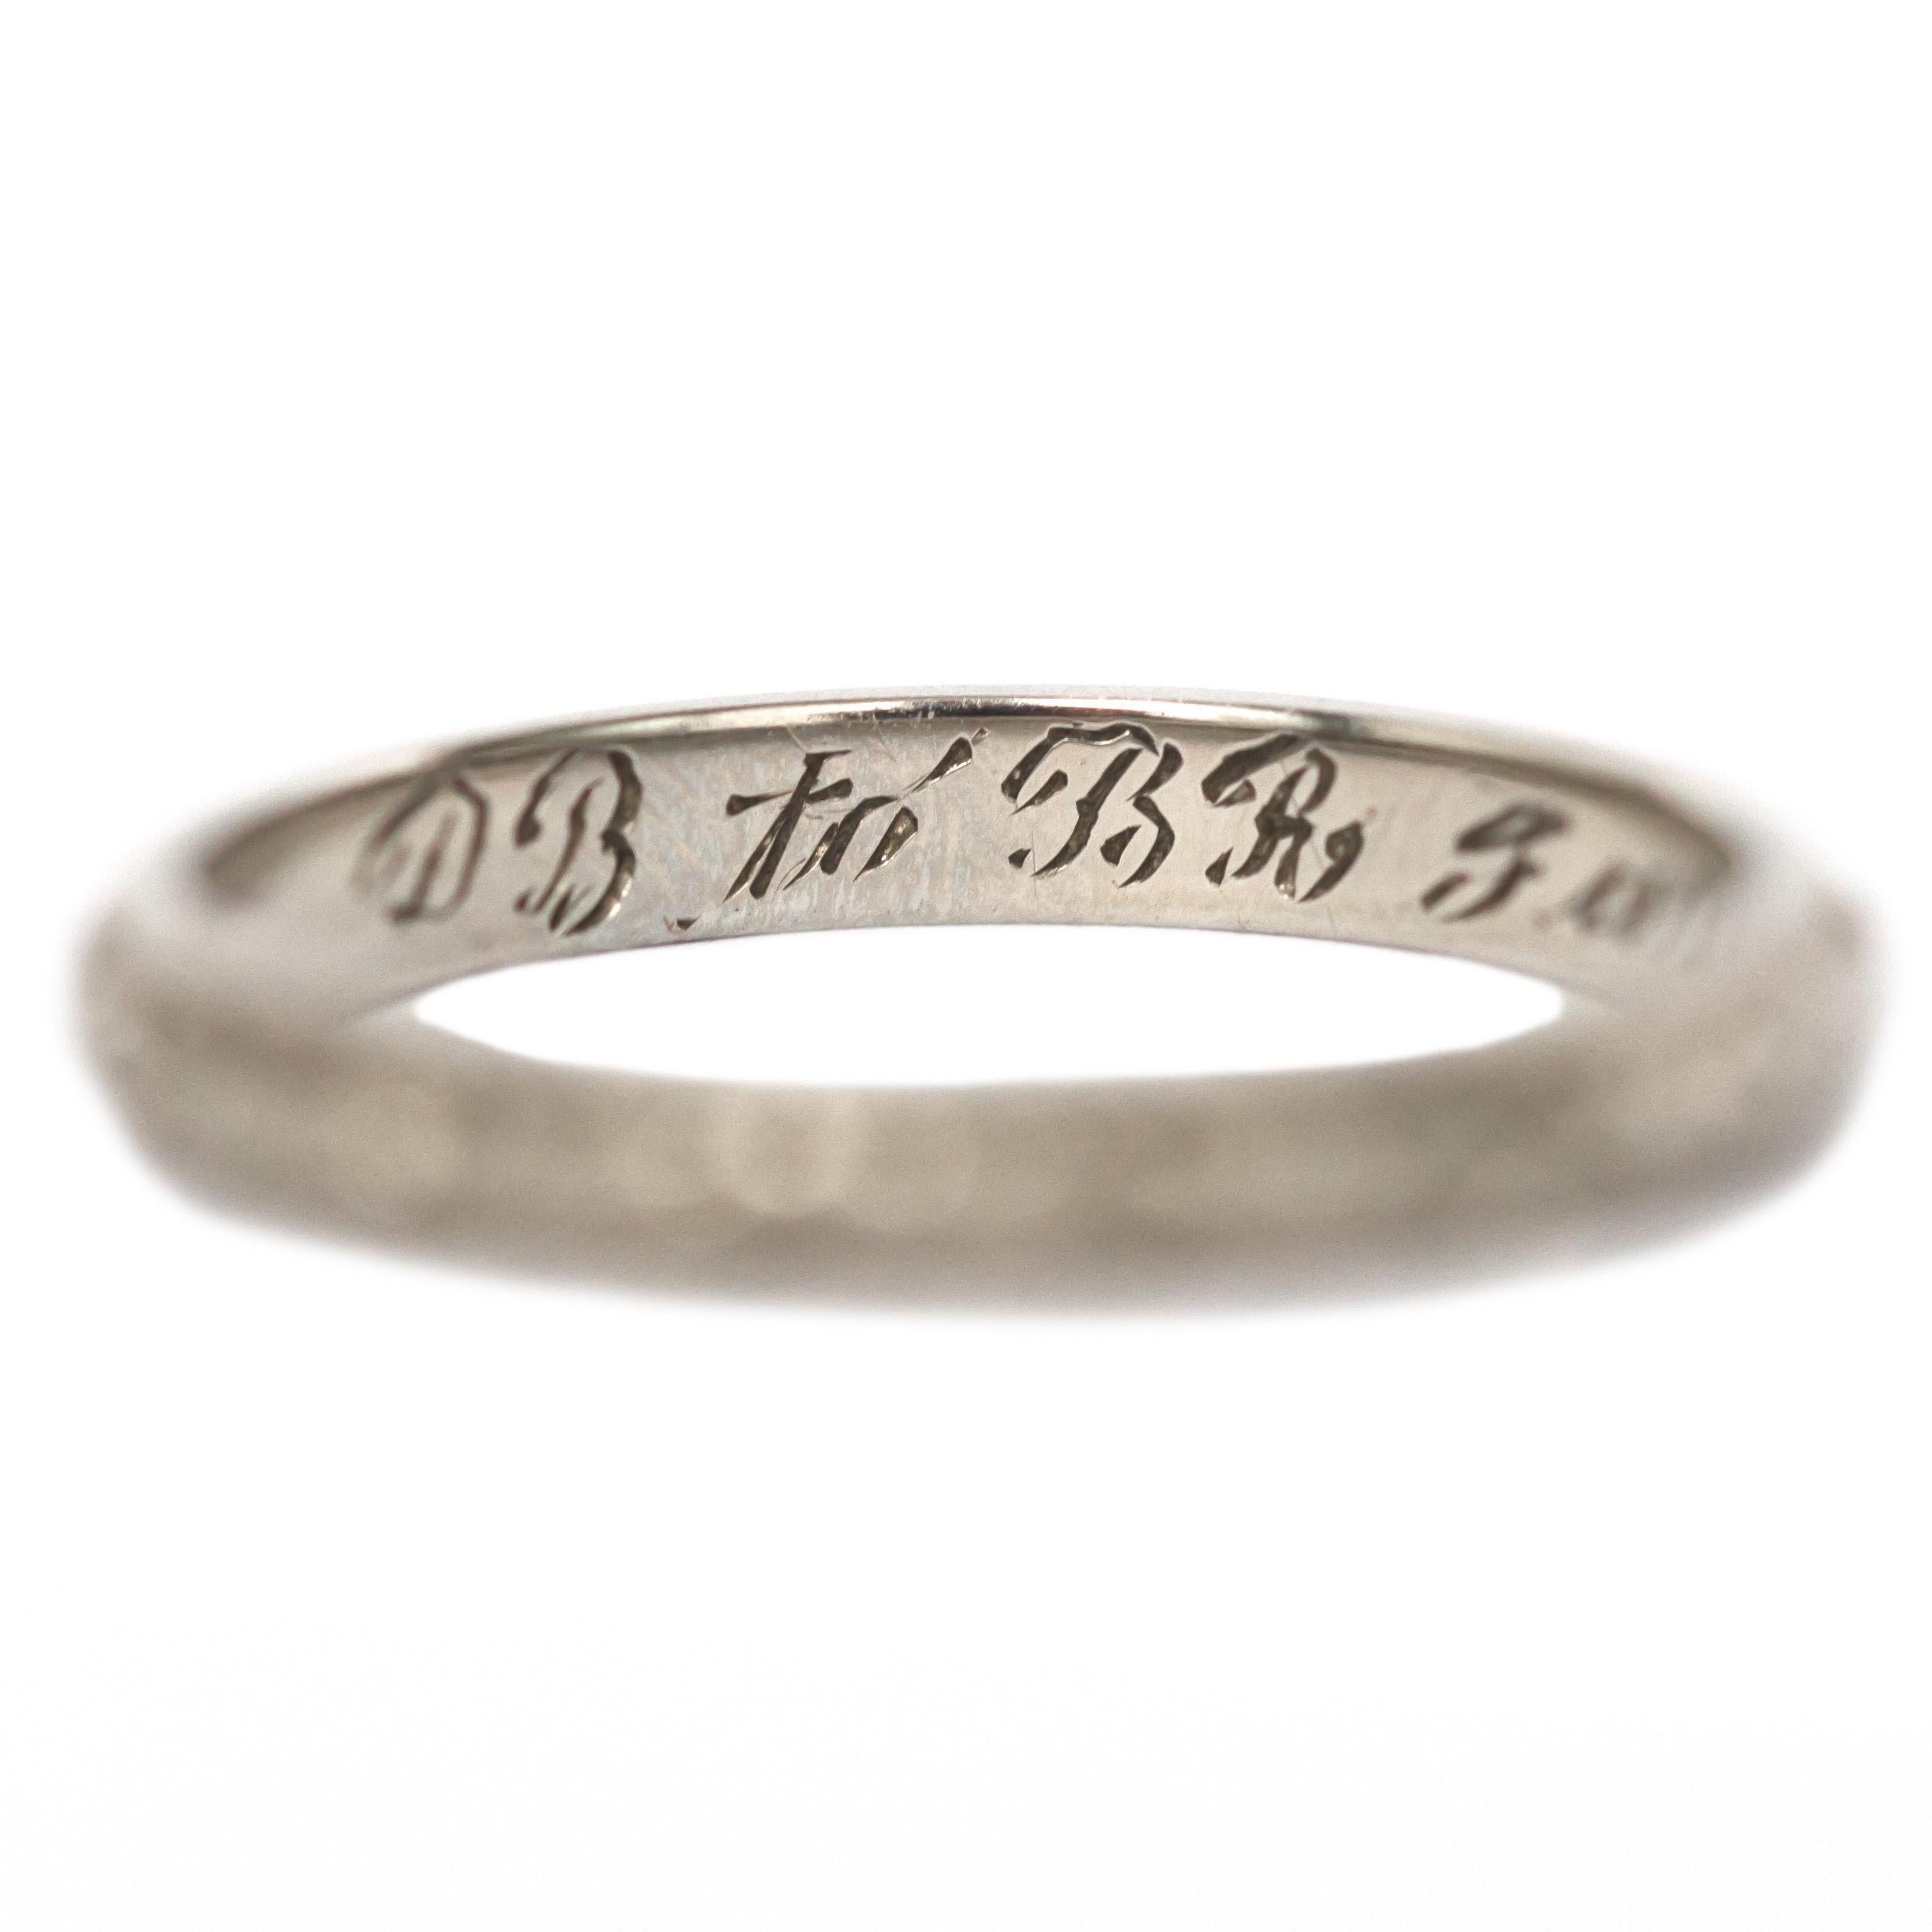 Ring Size: 5.90
Metal Type: 18 karat White Gold 
Weight: 2.4 grams

Finger to Top of Stone Measurement: 1.55mm
Width: 2.67mm

Engraving: 